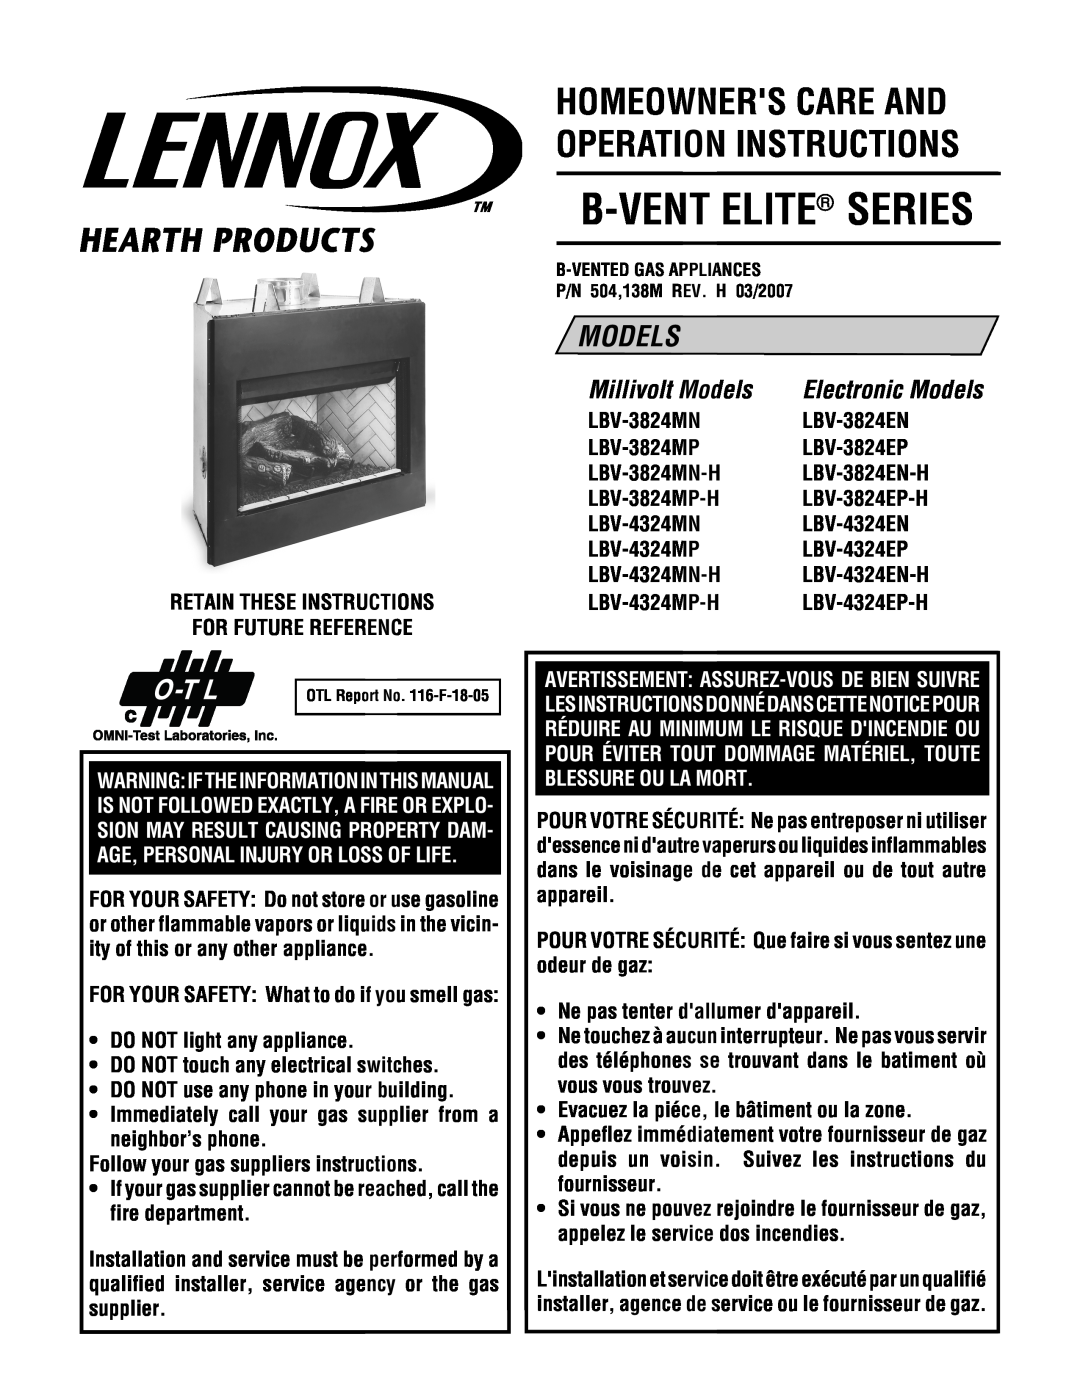 Lennox Hearth LBV-4324MP-H manual B-Ventelite Series, Homeowners Care And Operation Instructions, Millivolt Models 